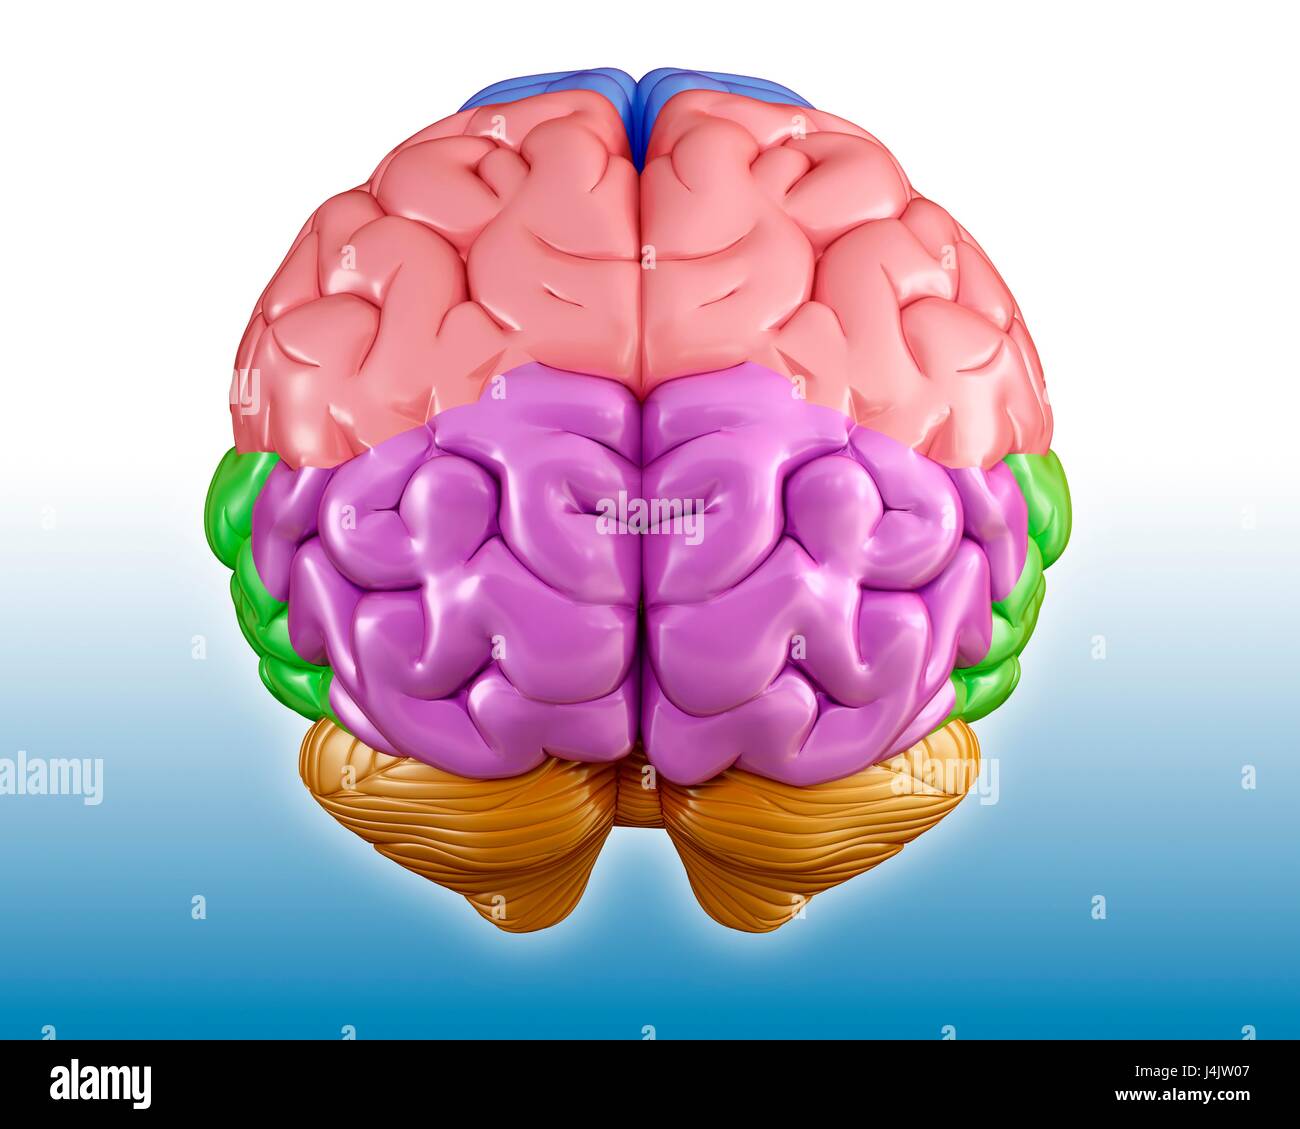 Illustration of human brain regions. Stock Photo